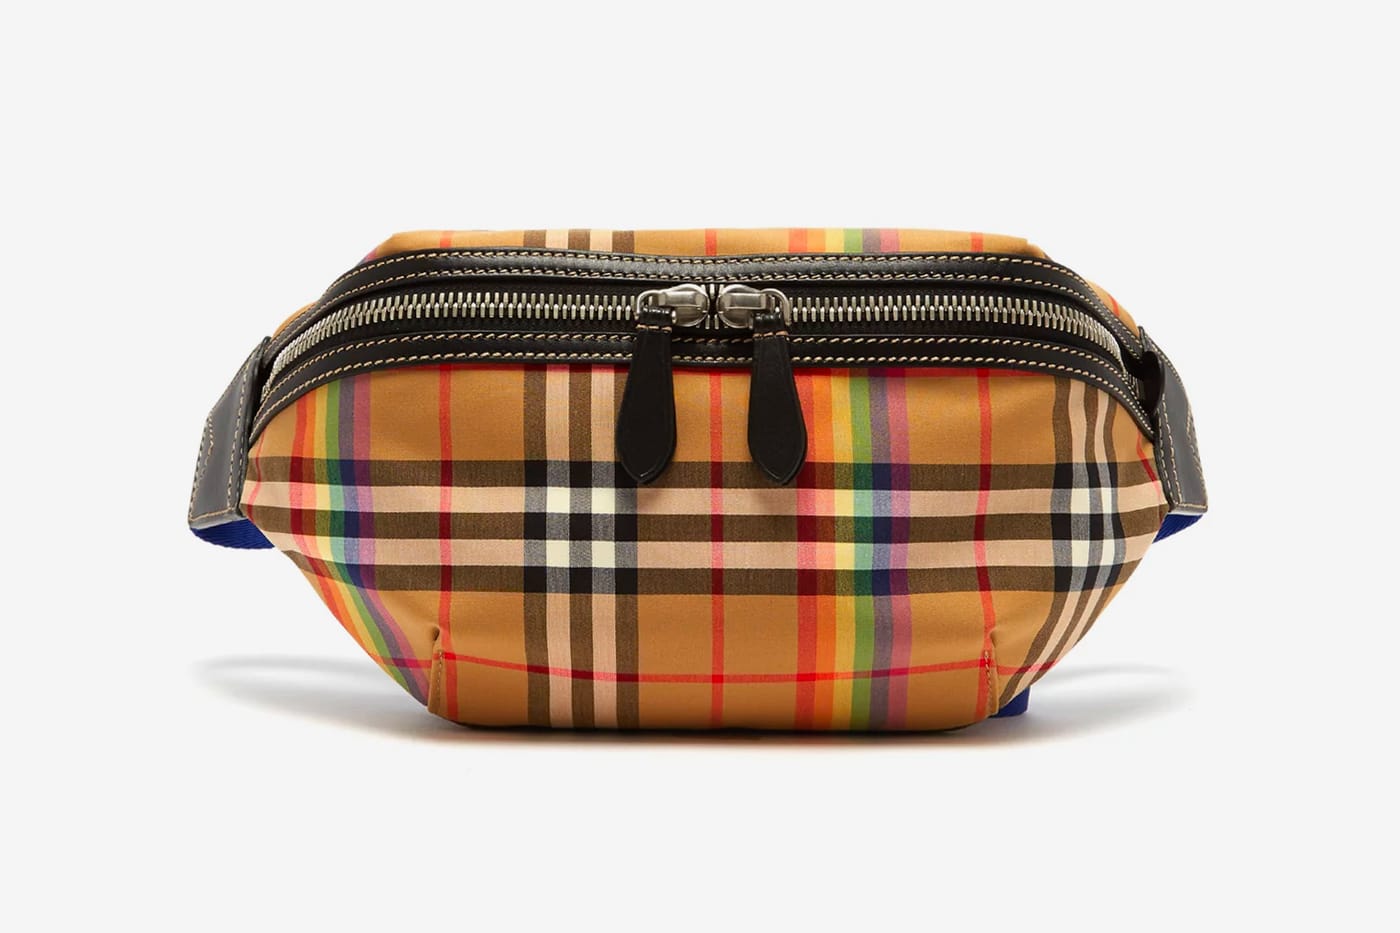 Burberry “Vintage Check” Cross-Body Bag 